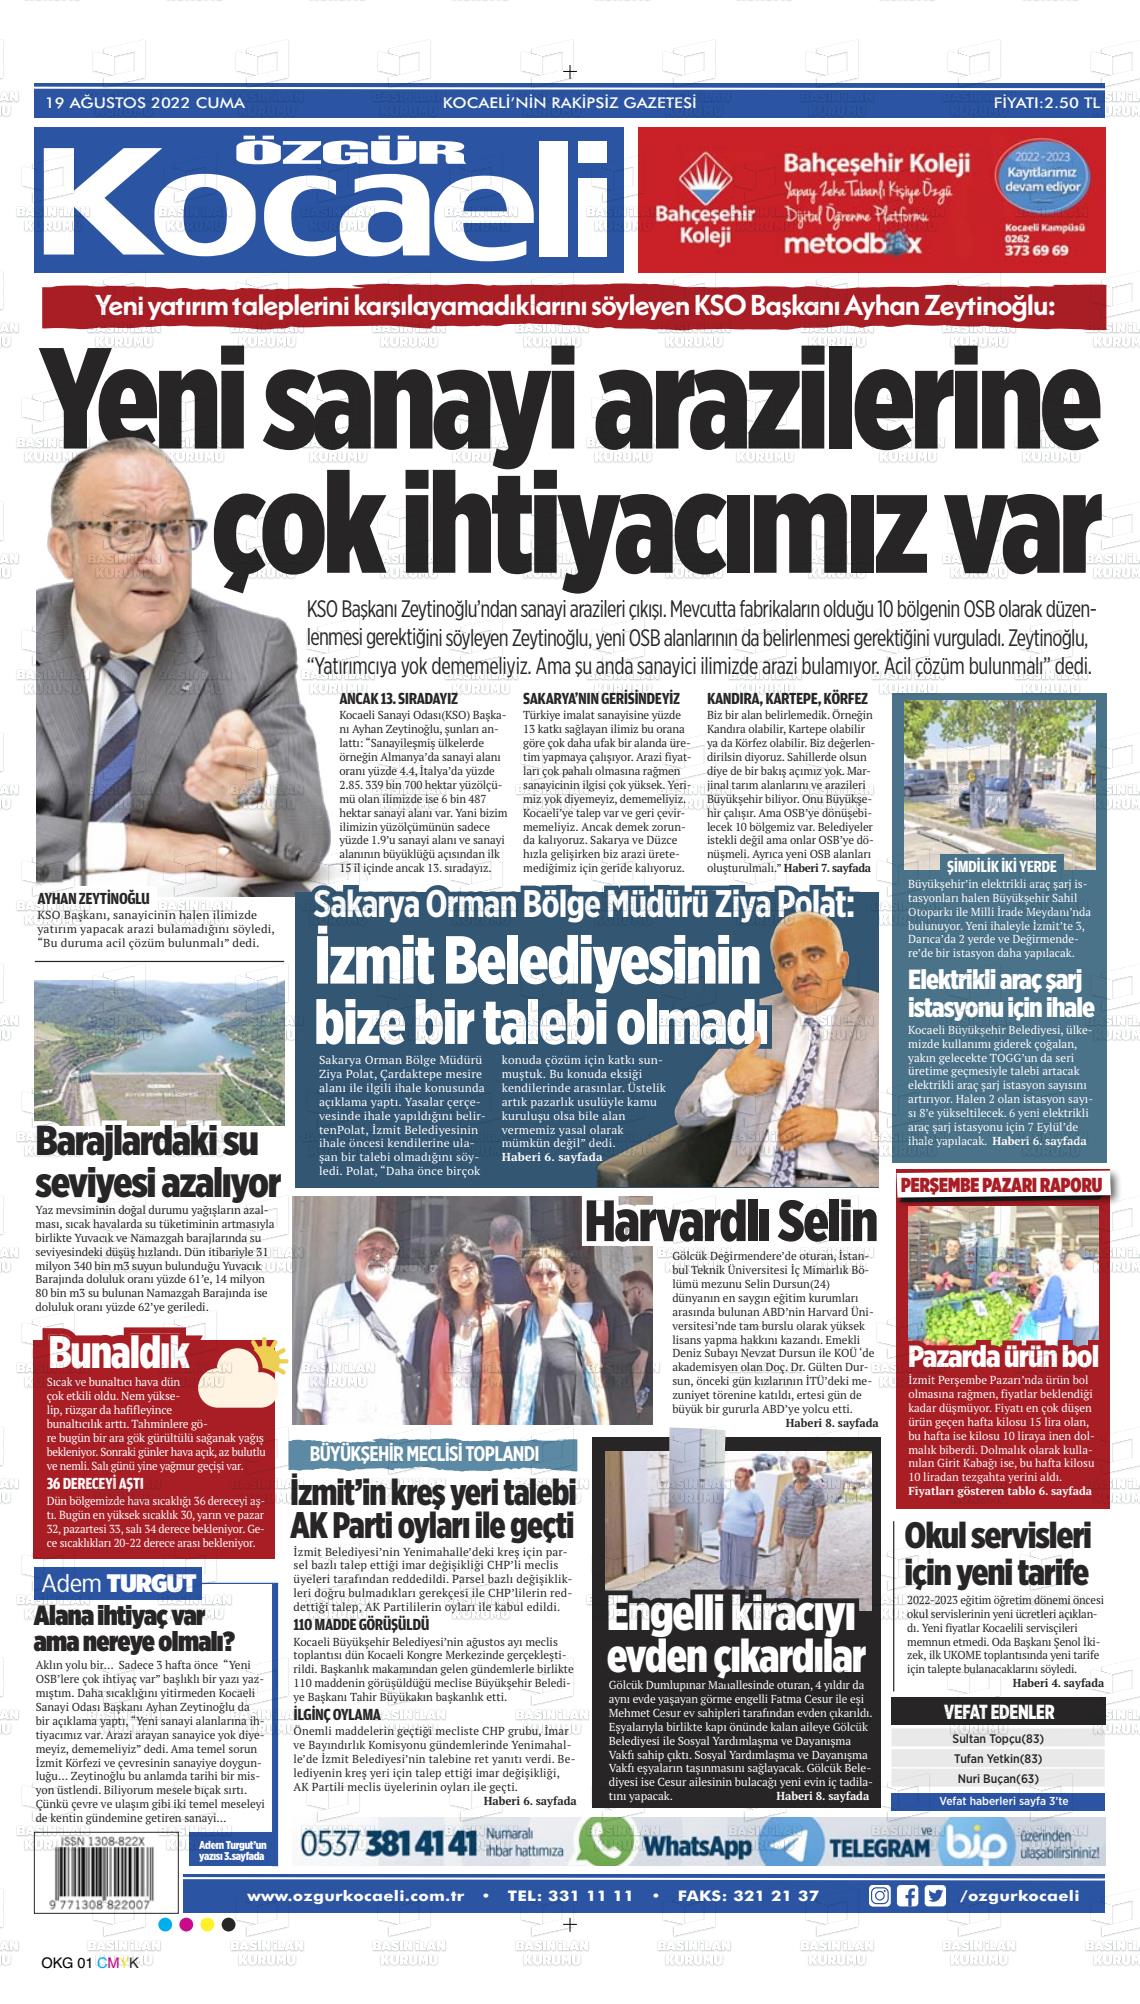 19 Ağustos 2022 Özgür Kocaeli Gazete Manşeti